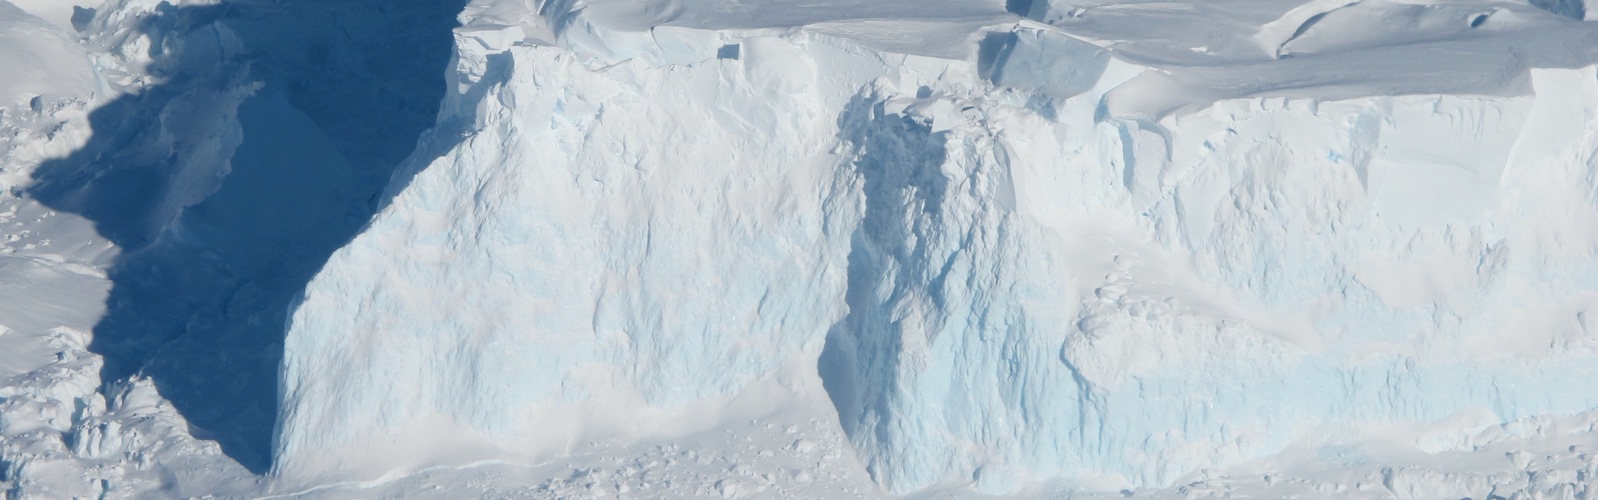 slide 1 - Photo of Thwaites Glacier in Antarctica.